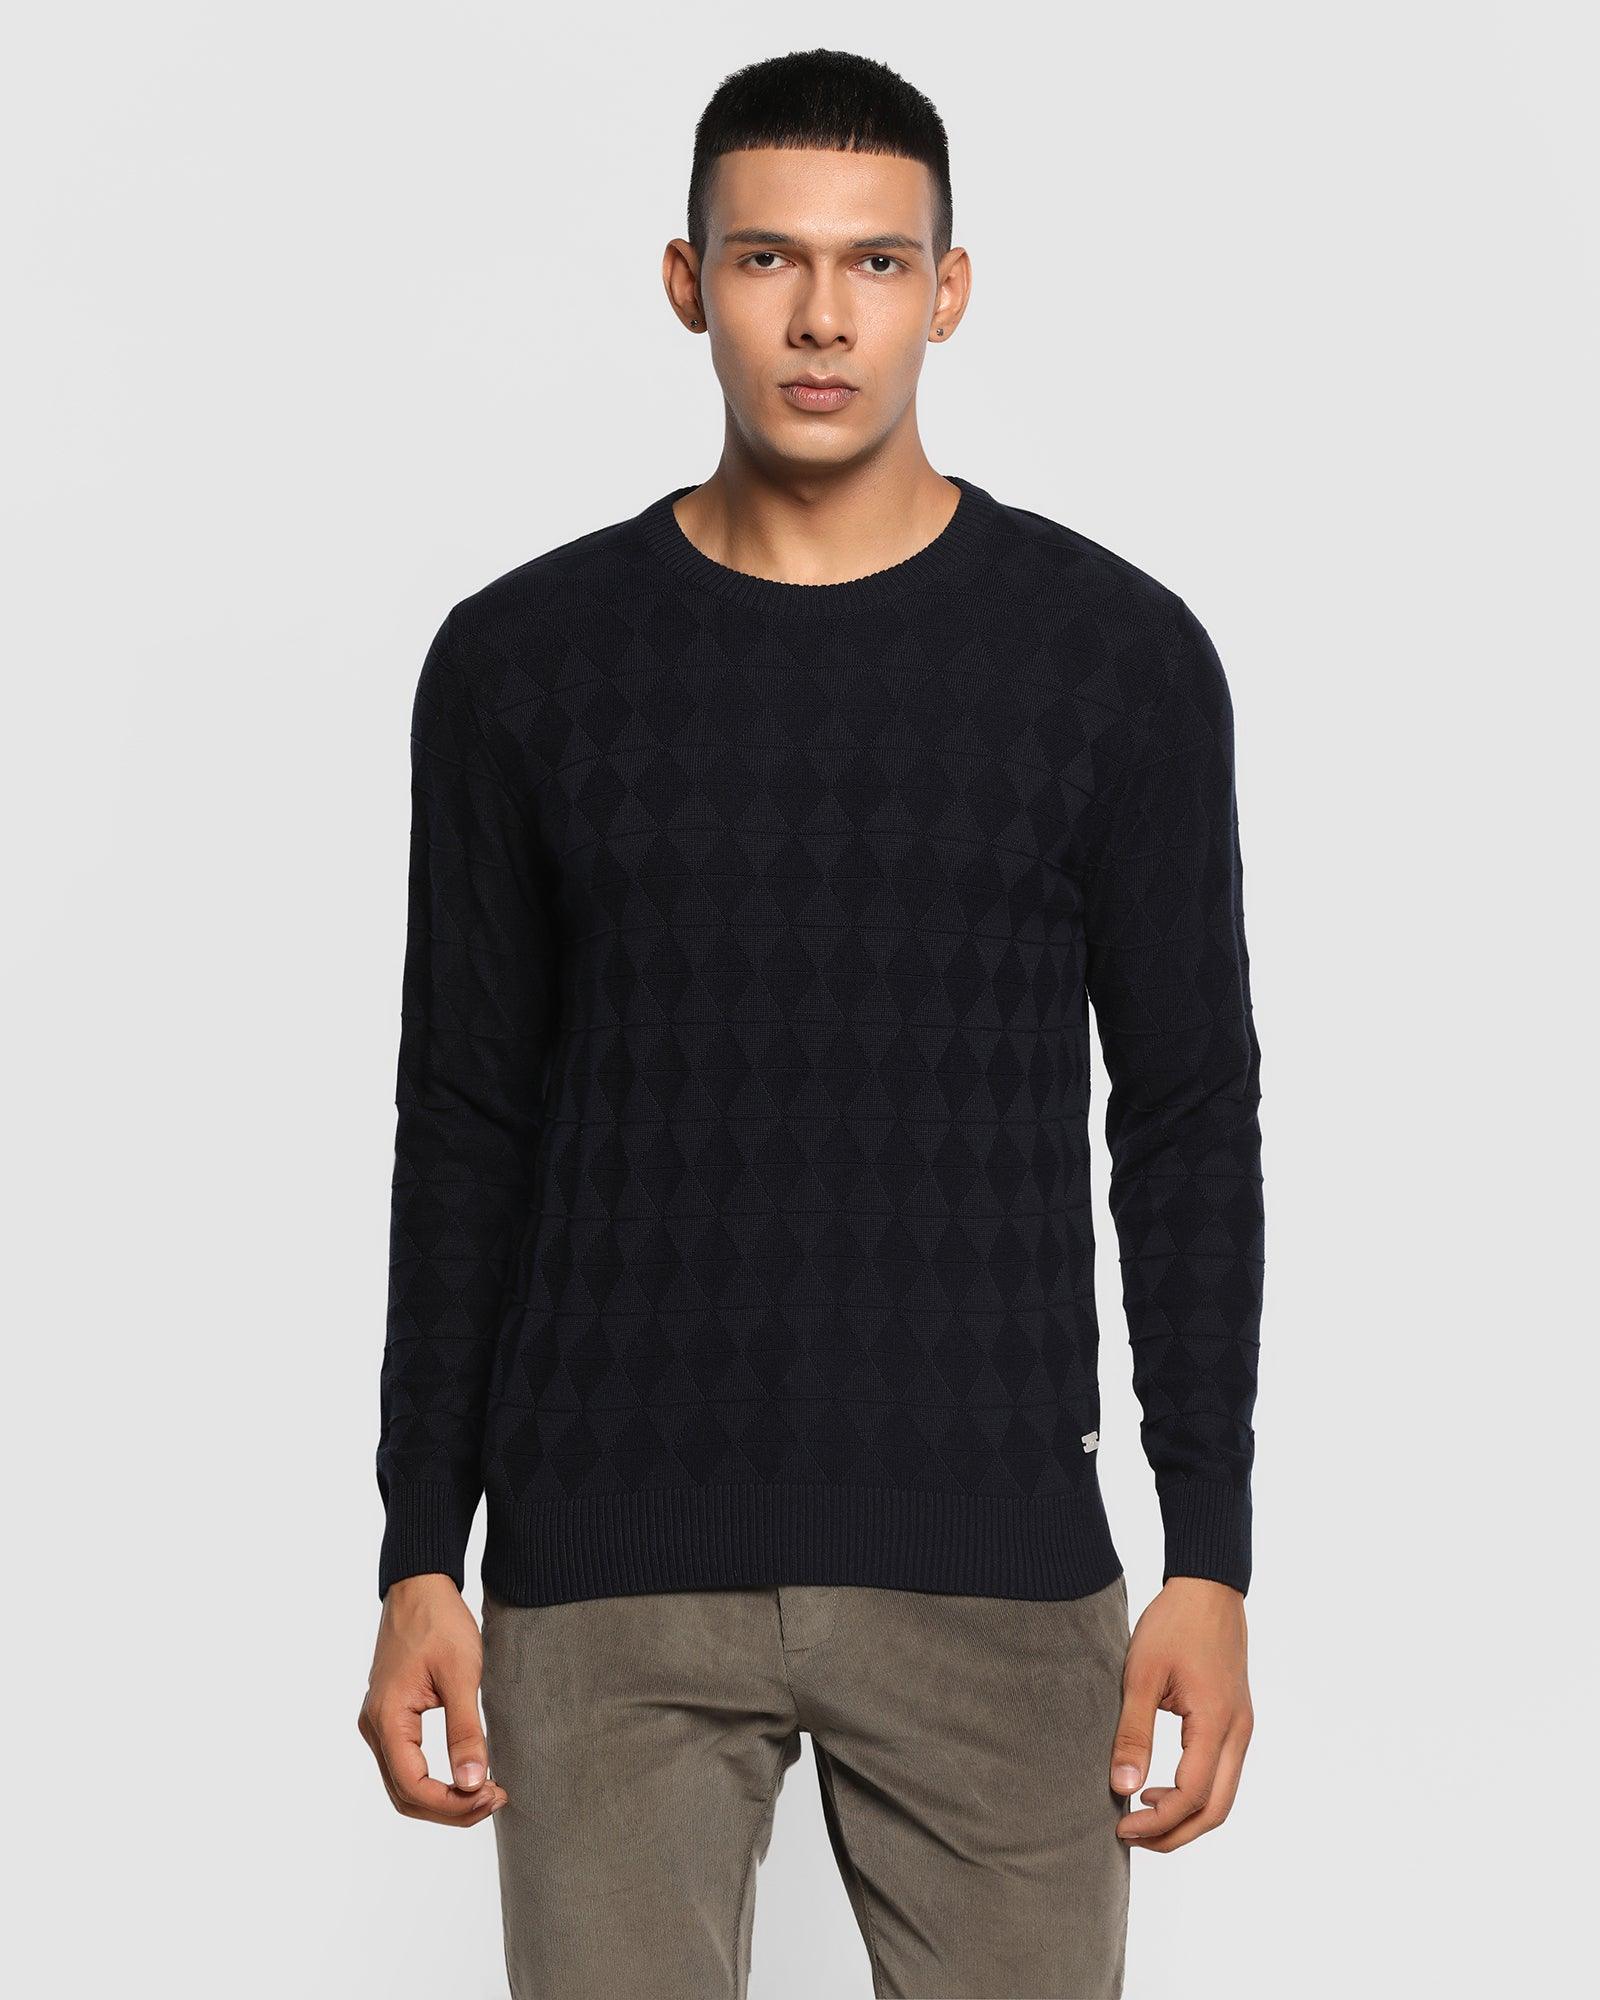 Crew Neck Navy Textured Sweater - Tyrus